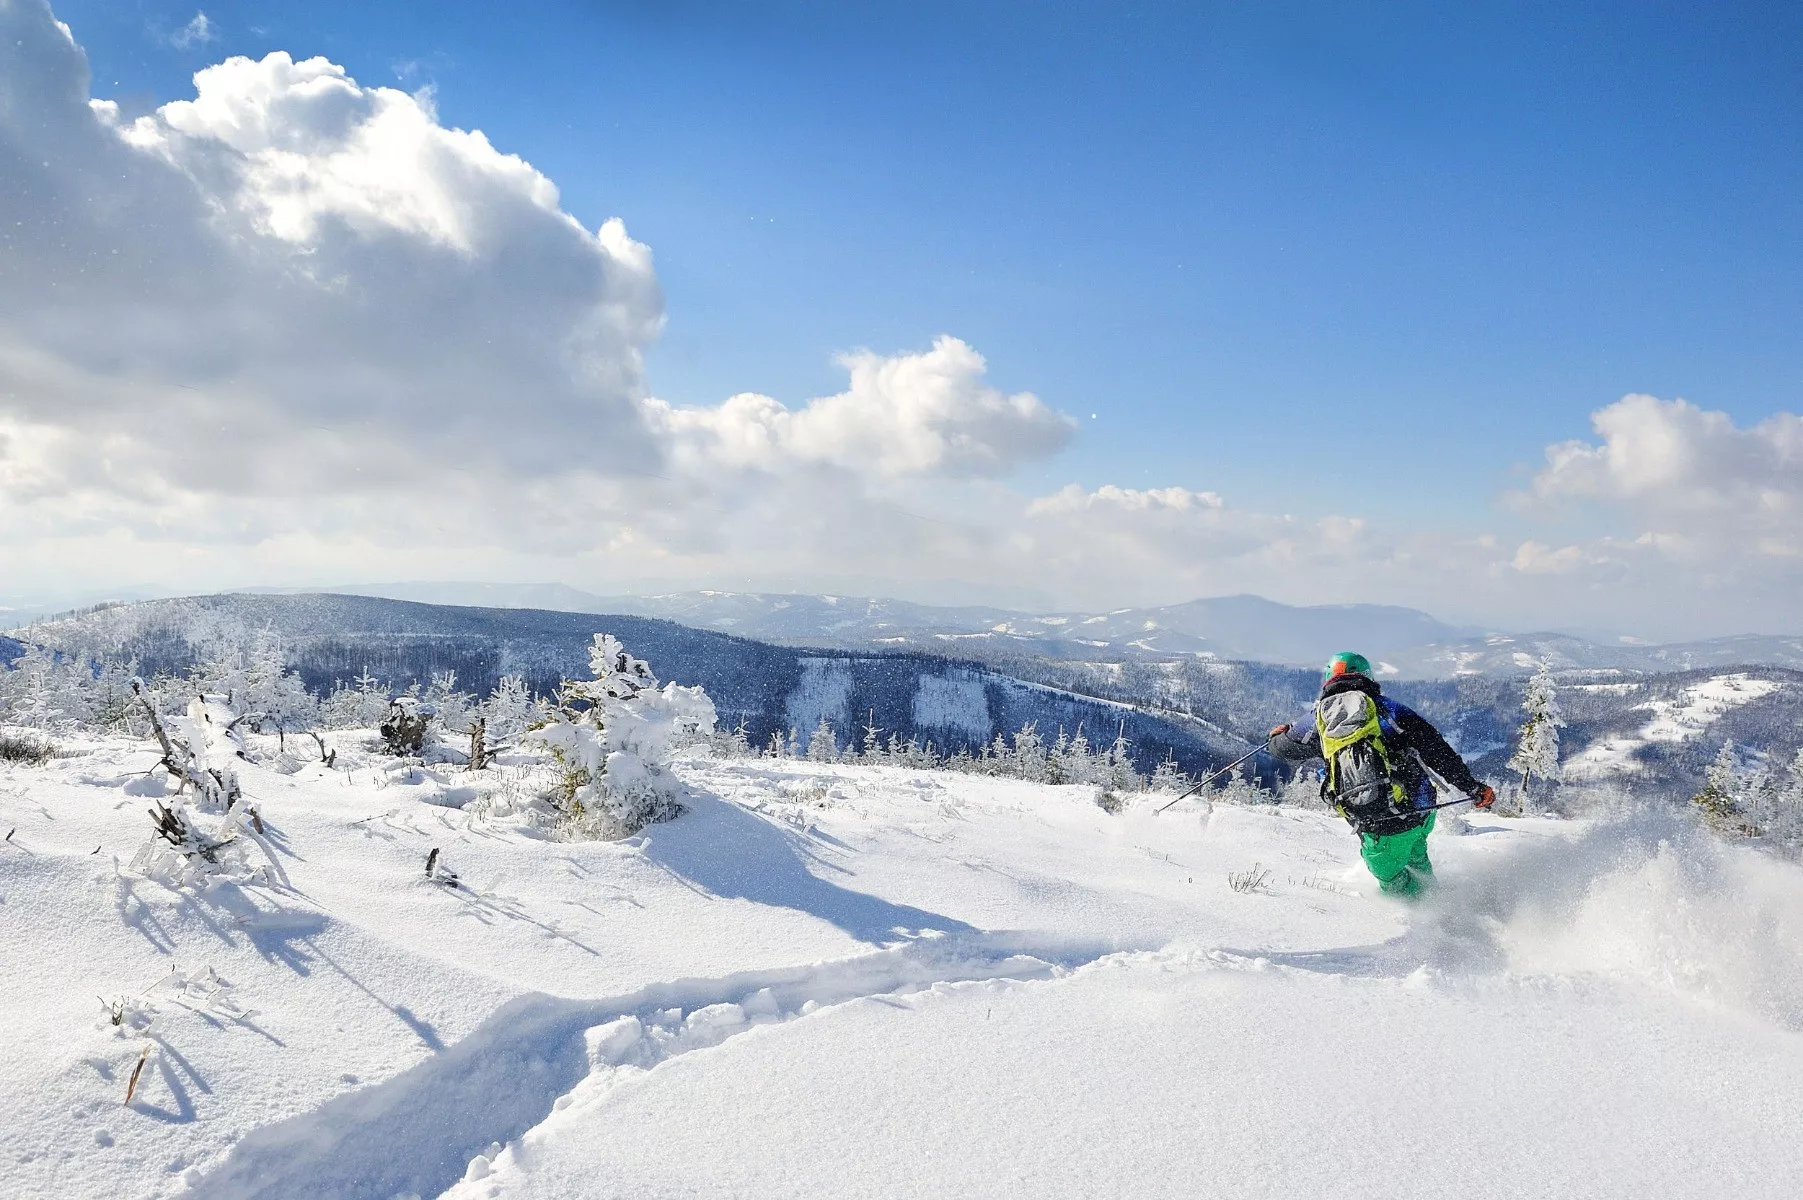 Szczyrk Mountain Resort in Poland, Europe | Snowboarding,Mountaineering,Skiing - Rated 4.4